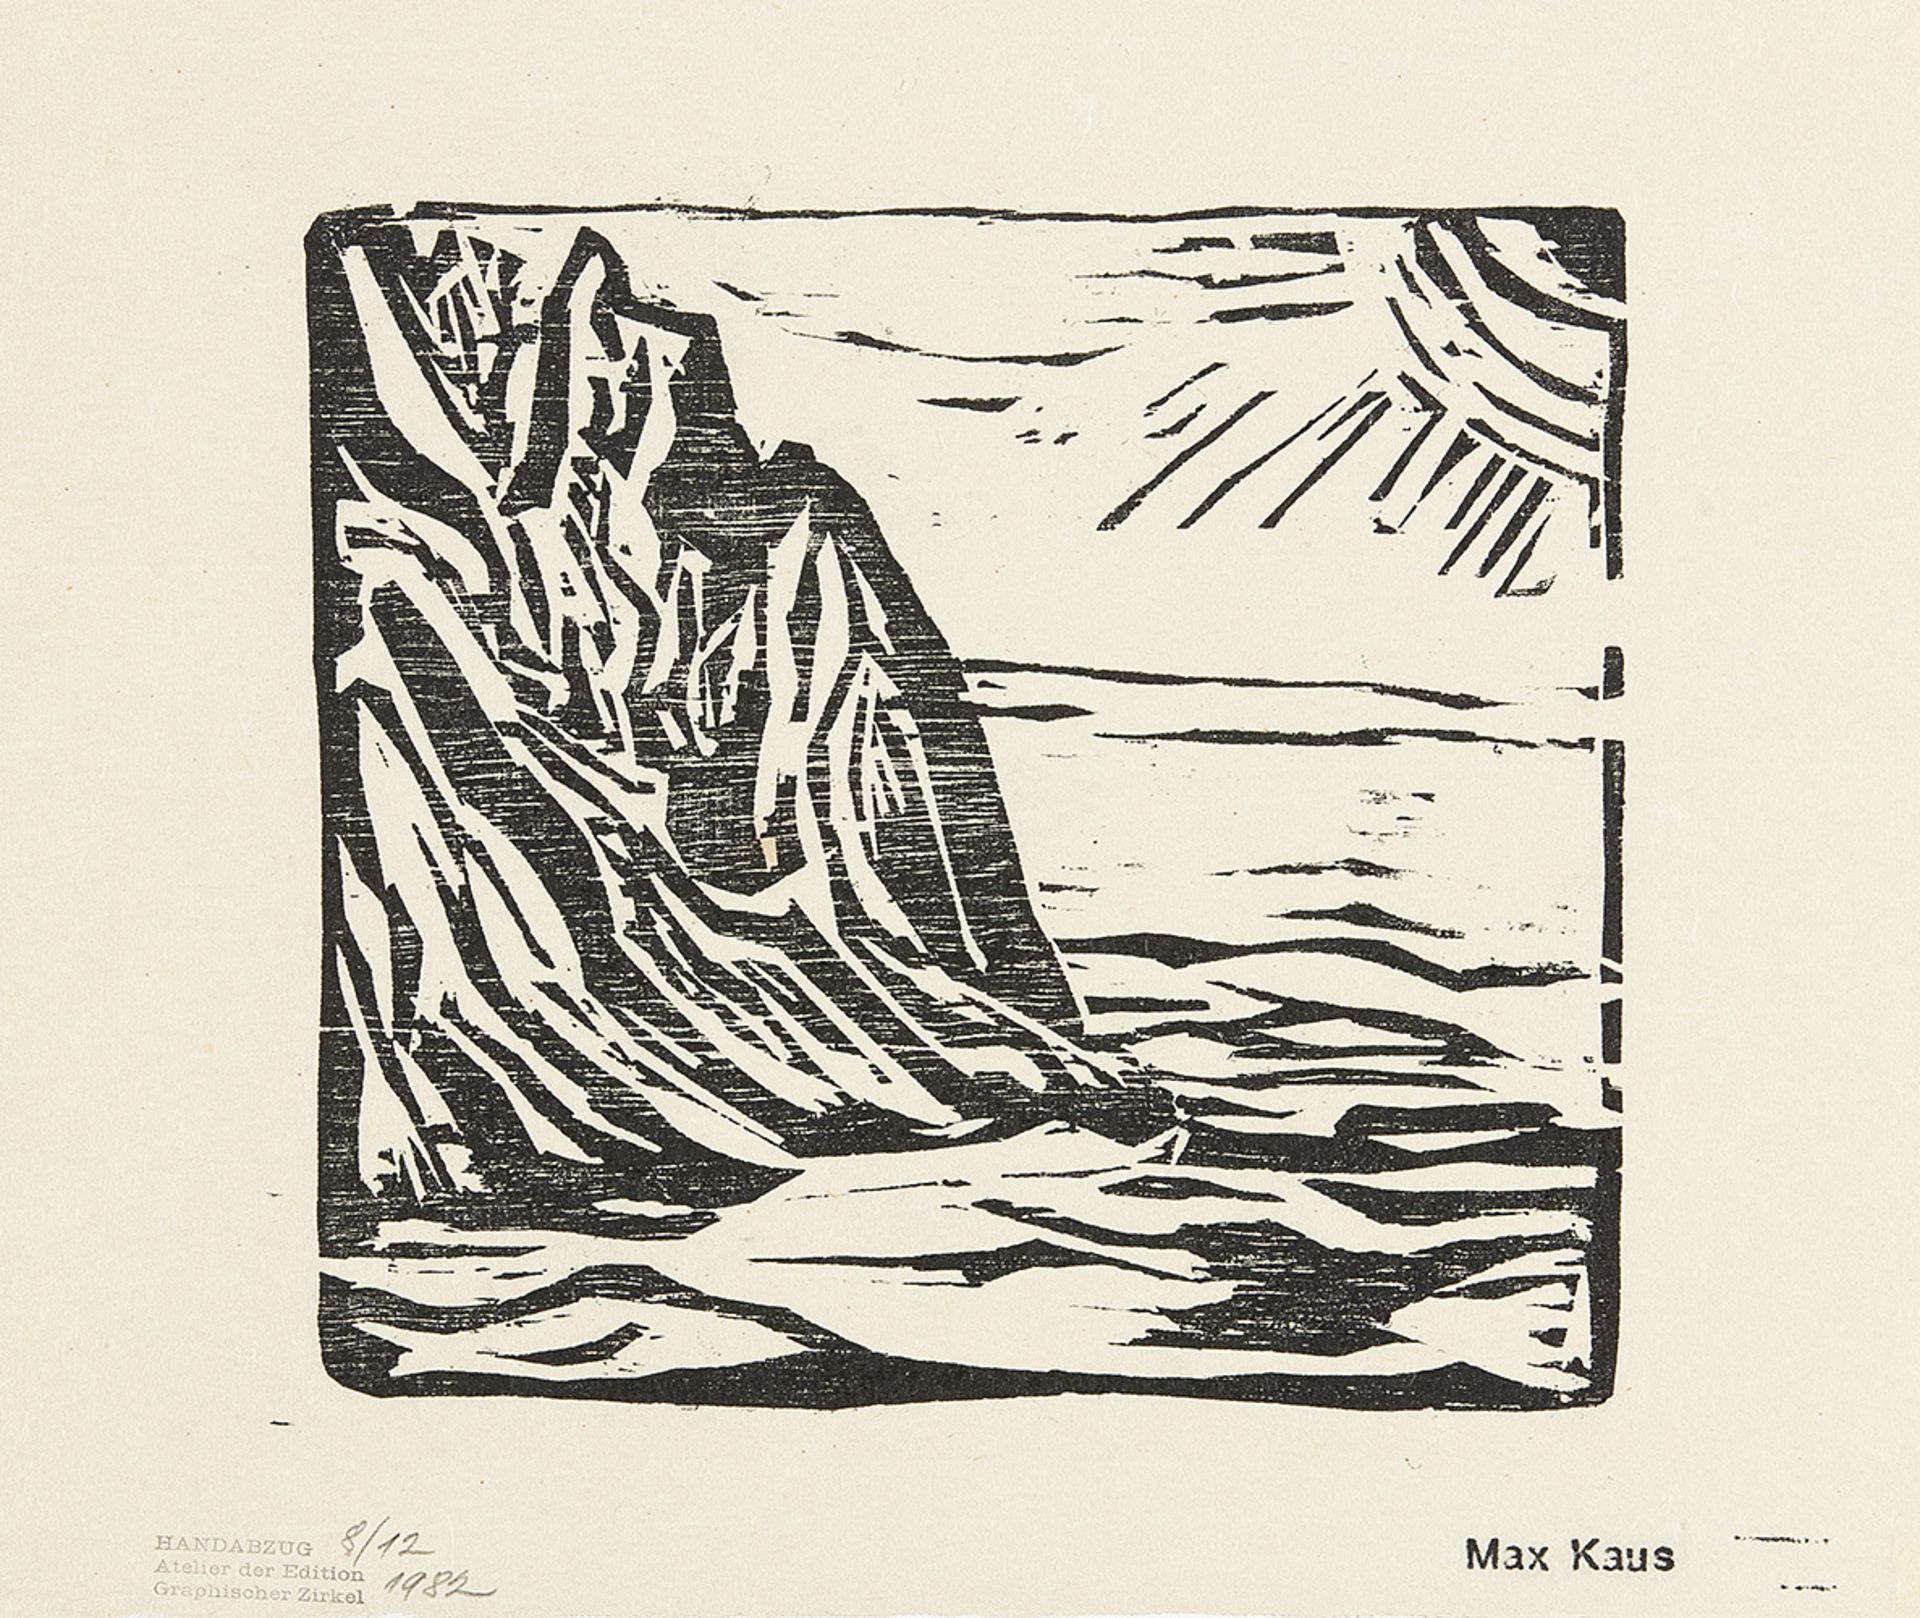 MAX KAUS* (Berlin 1891 - 1977 Berlin)